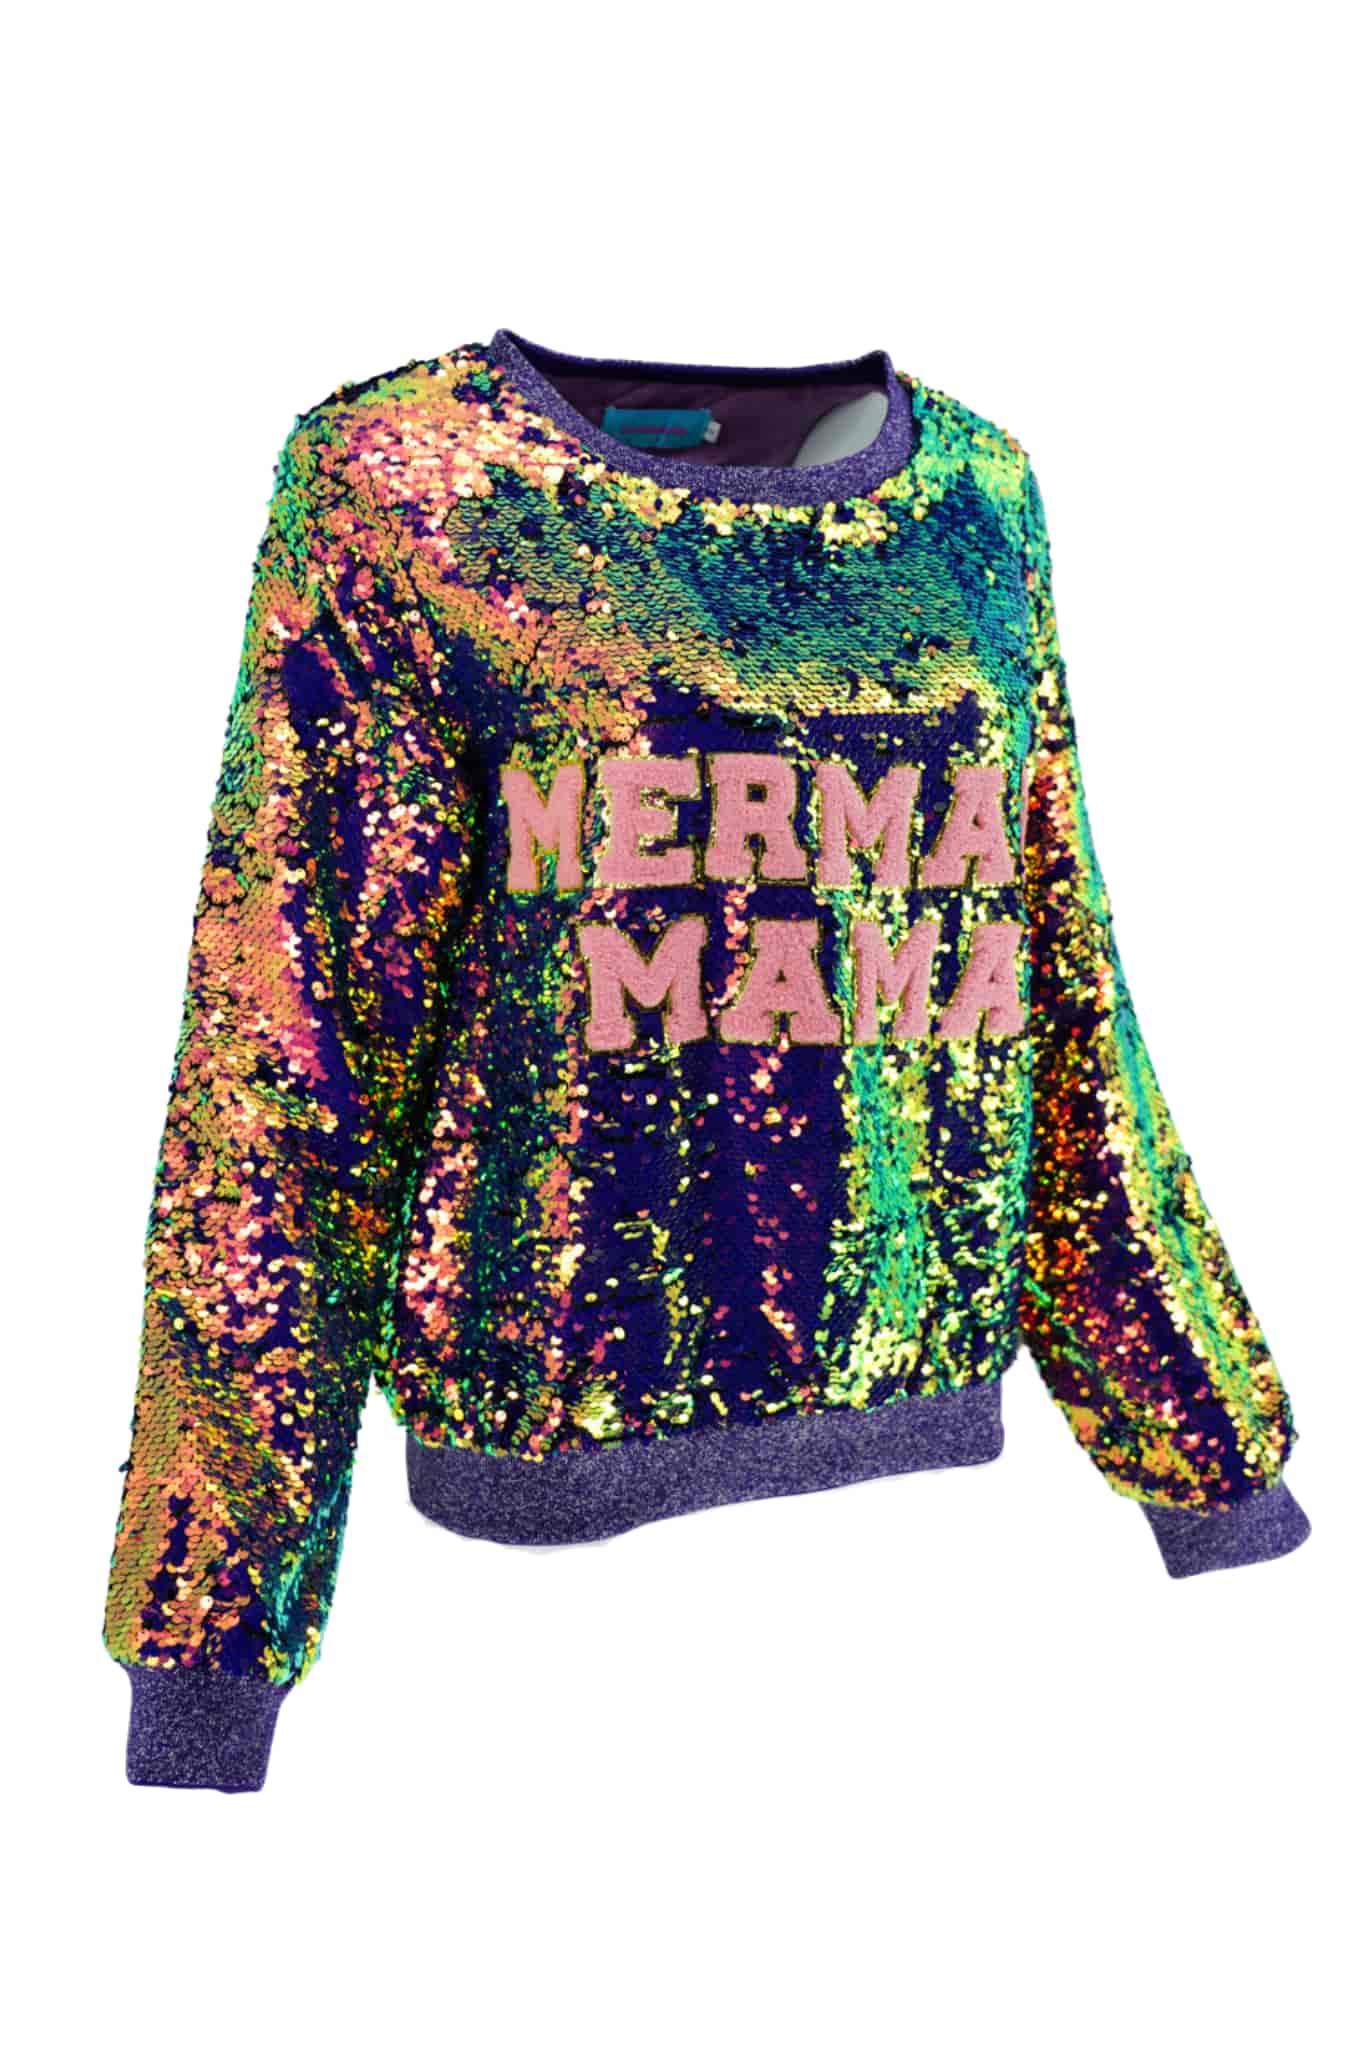 Mermaid Mama Sweatshirt side